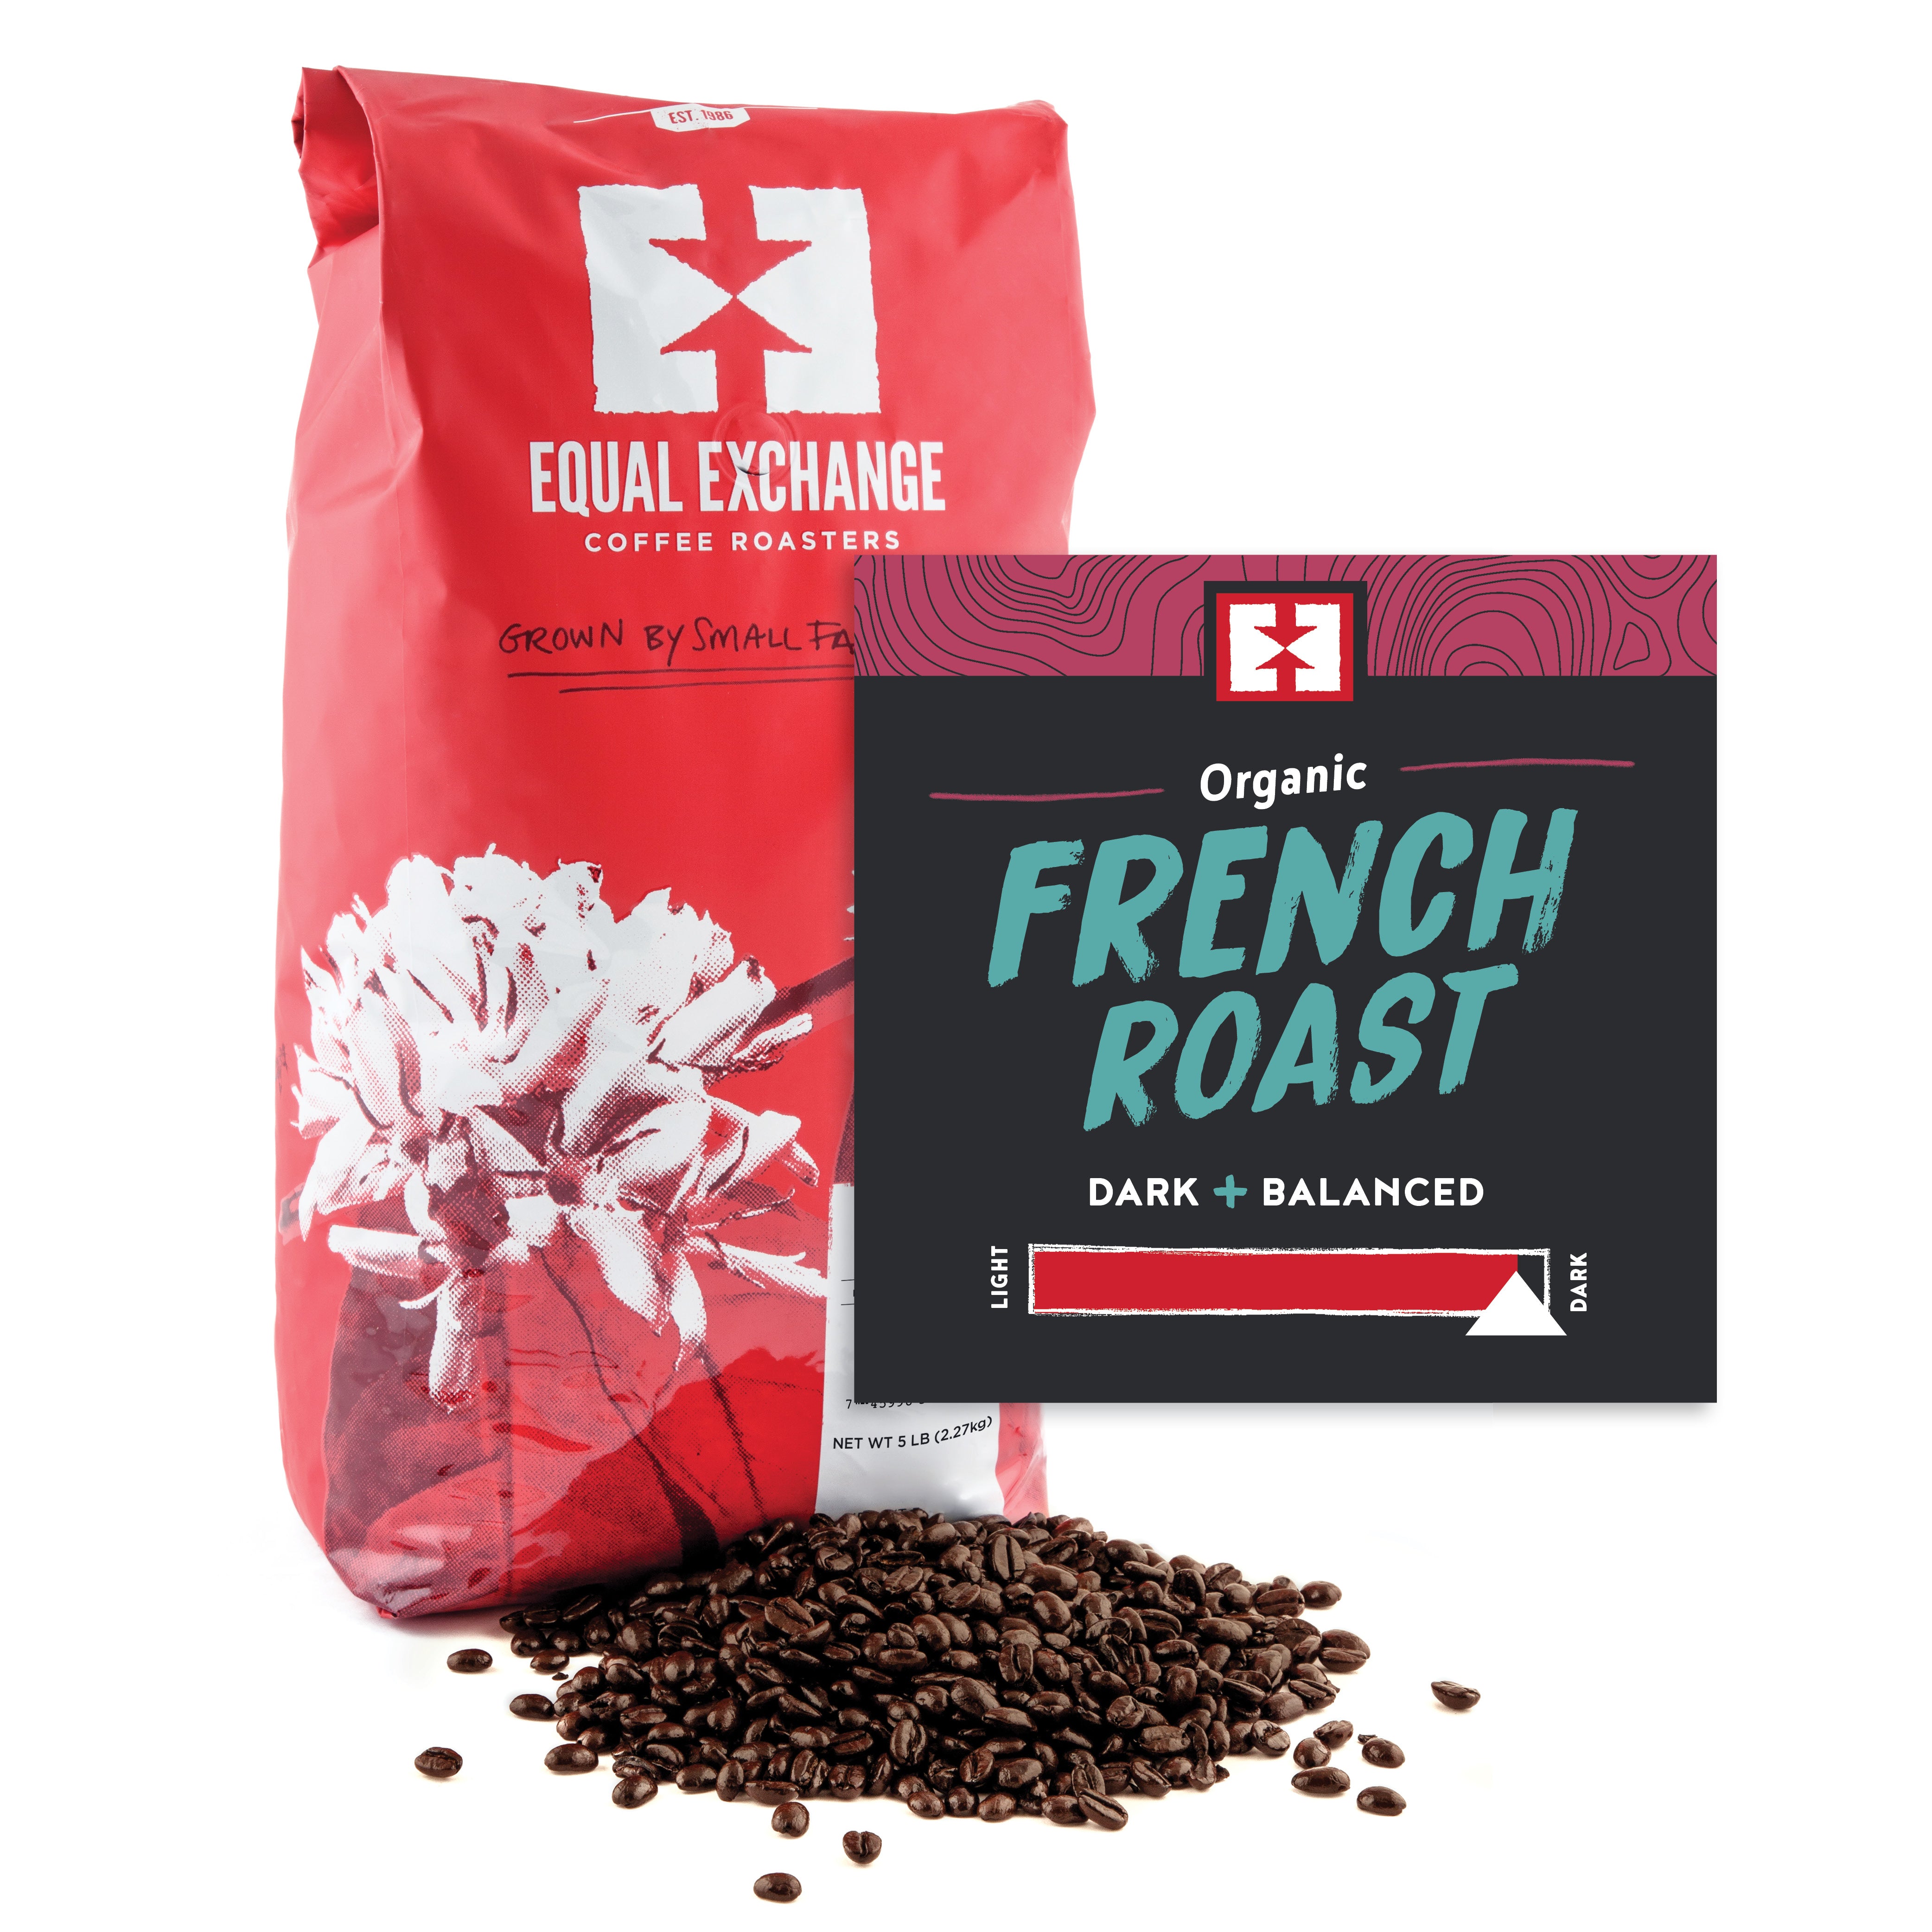 Exchange of France Tea Bags